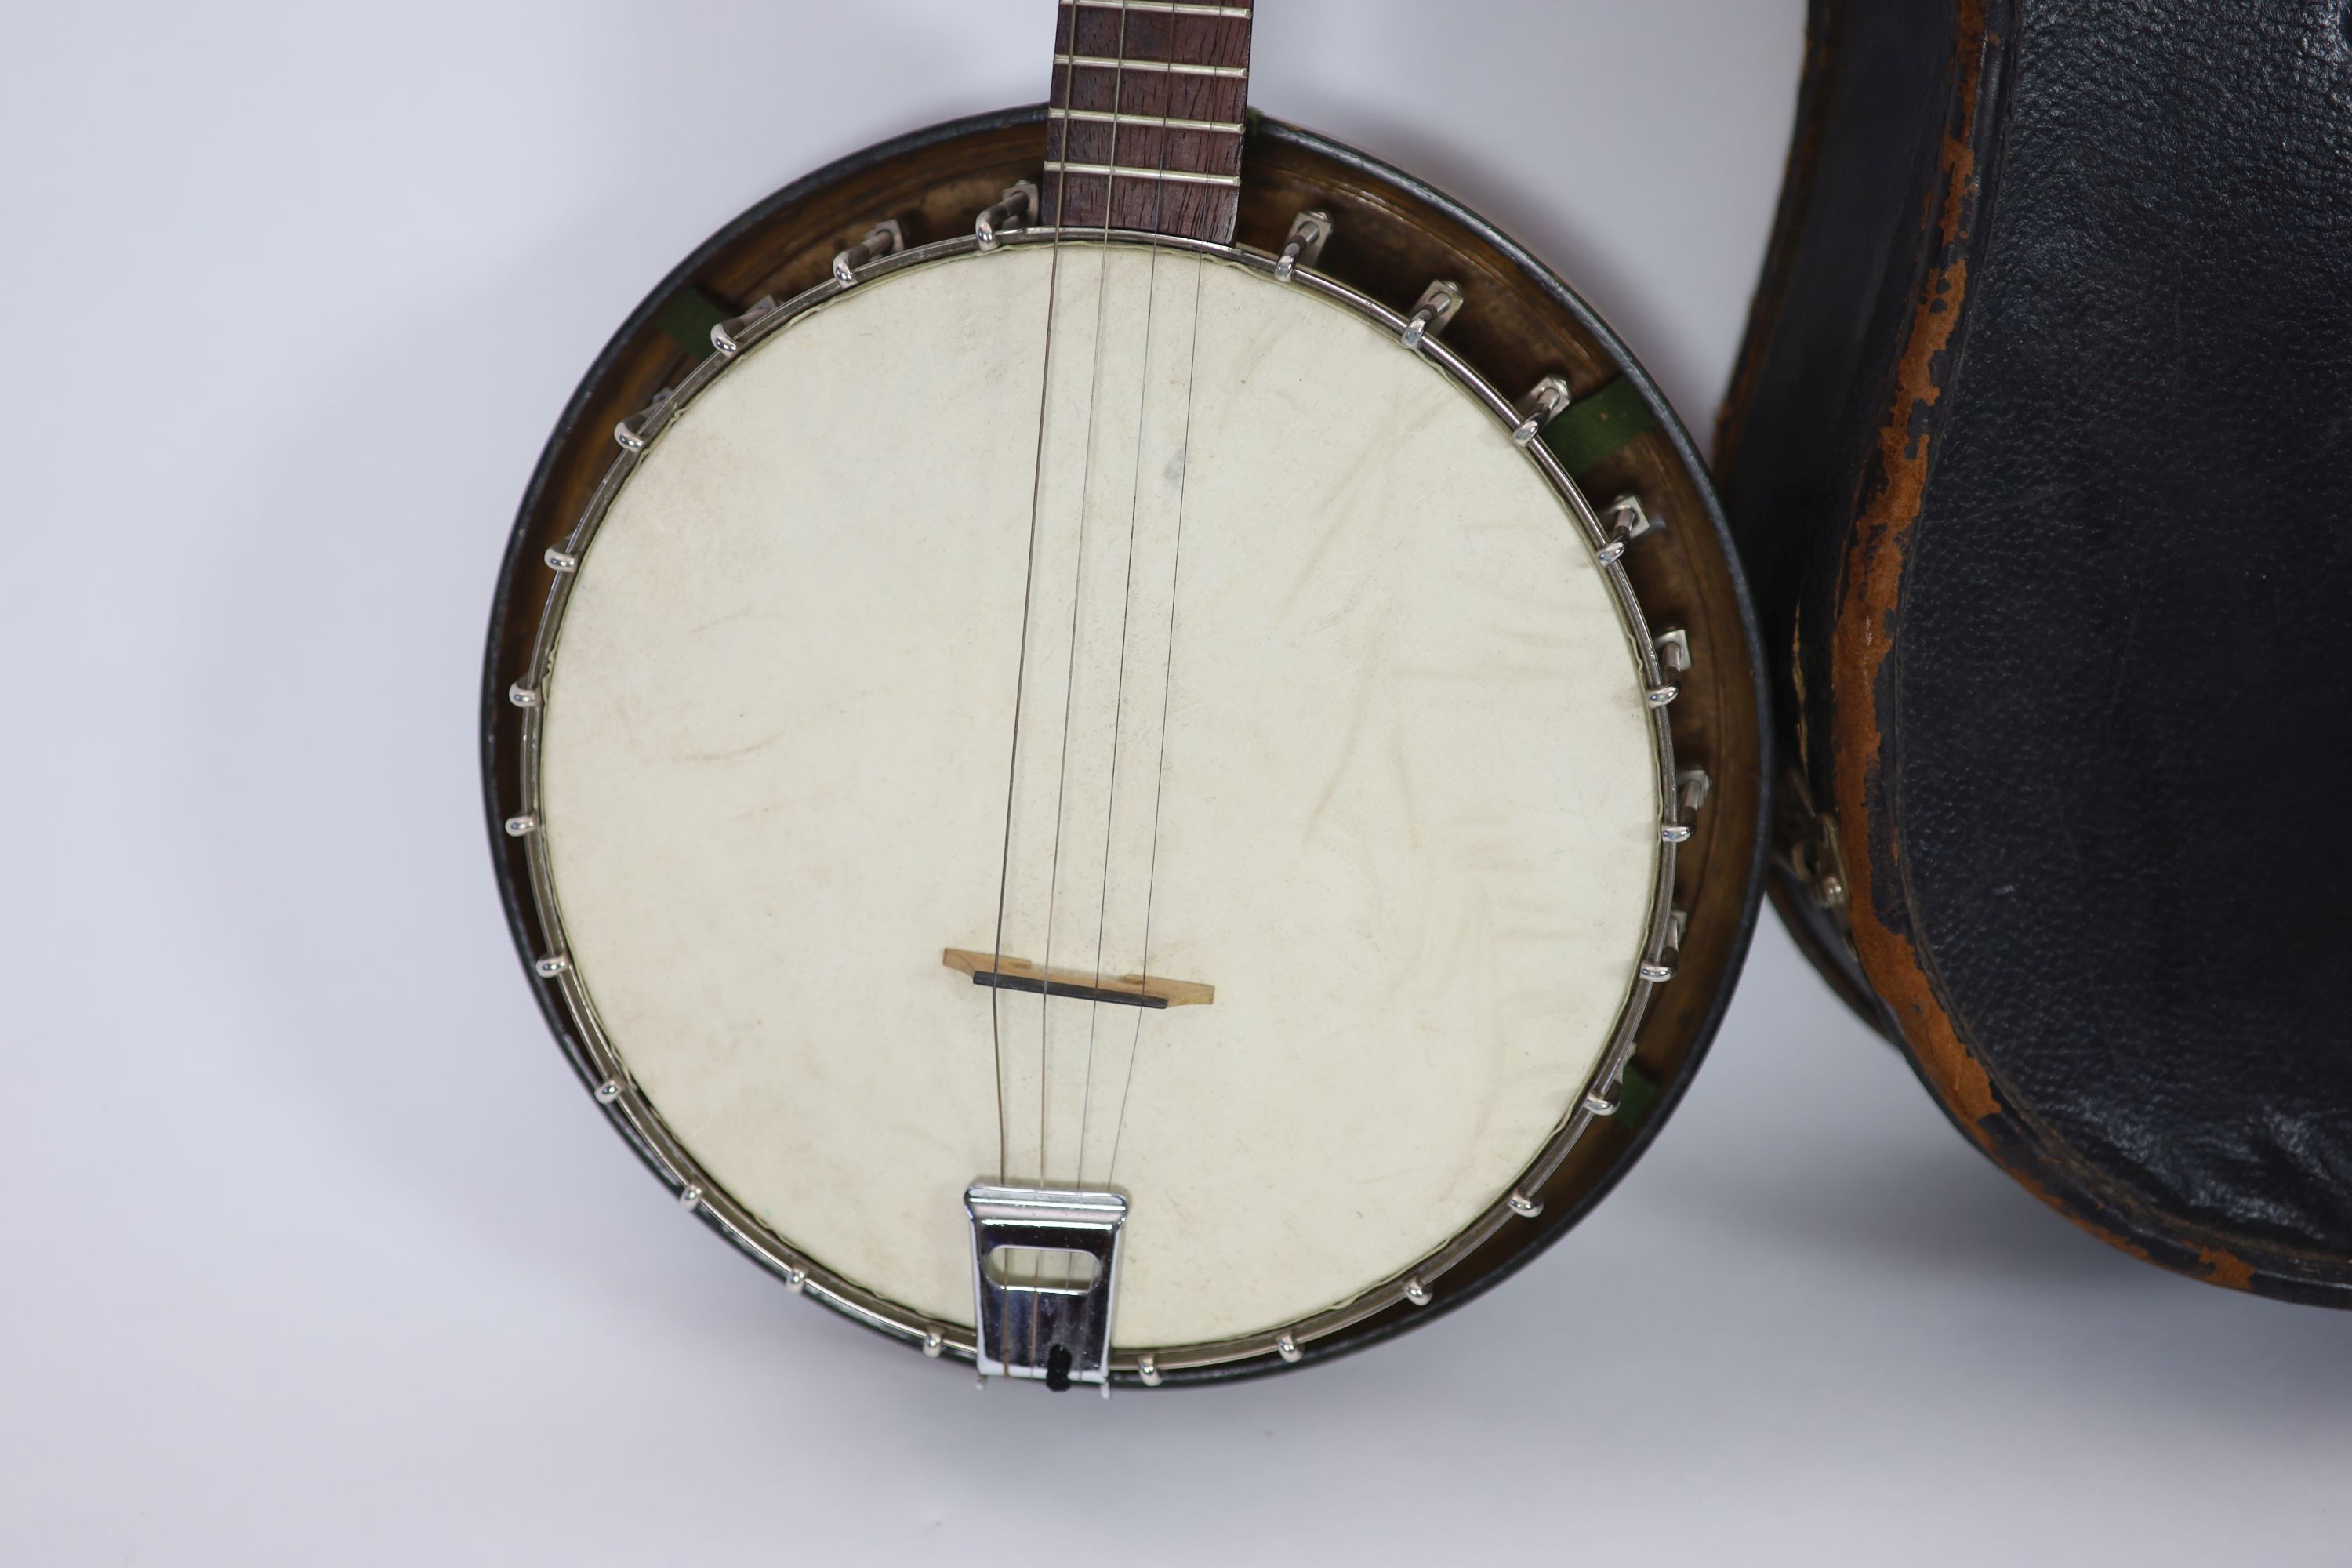 A Vega banjo,nut to bridge 22 inches, 19 frets,length 81cm - Image 5 of 7